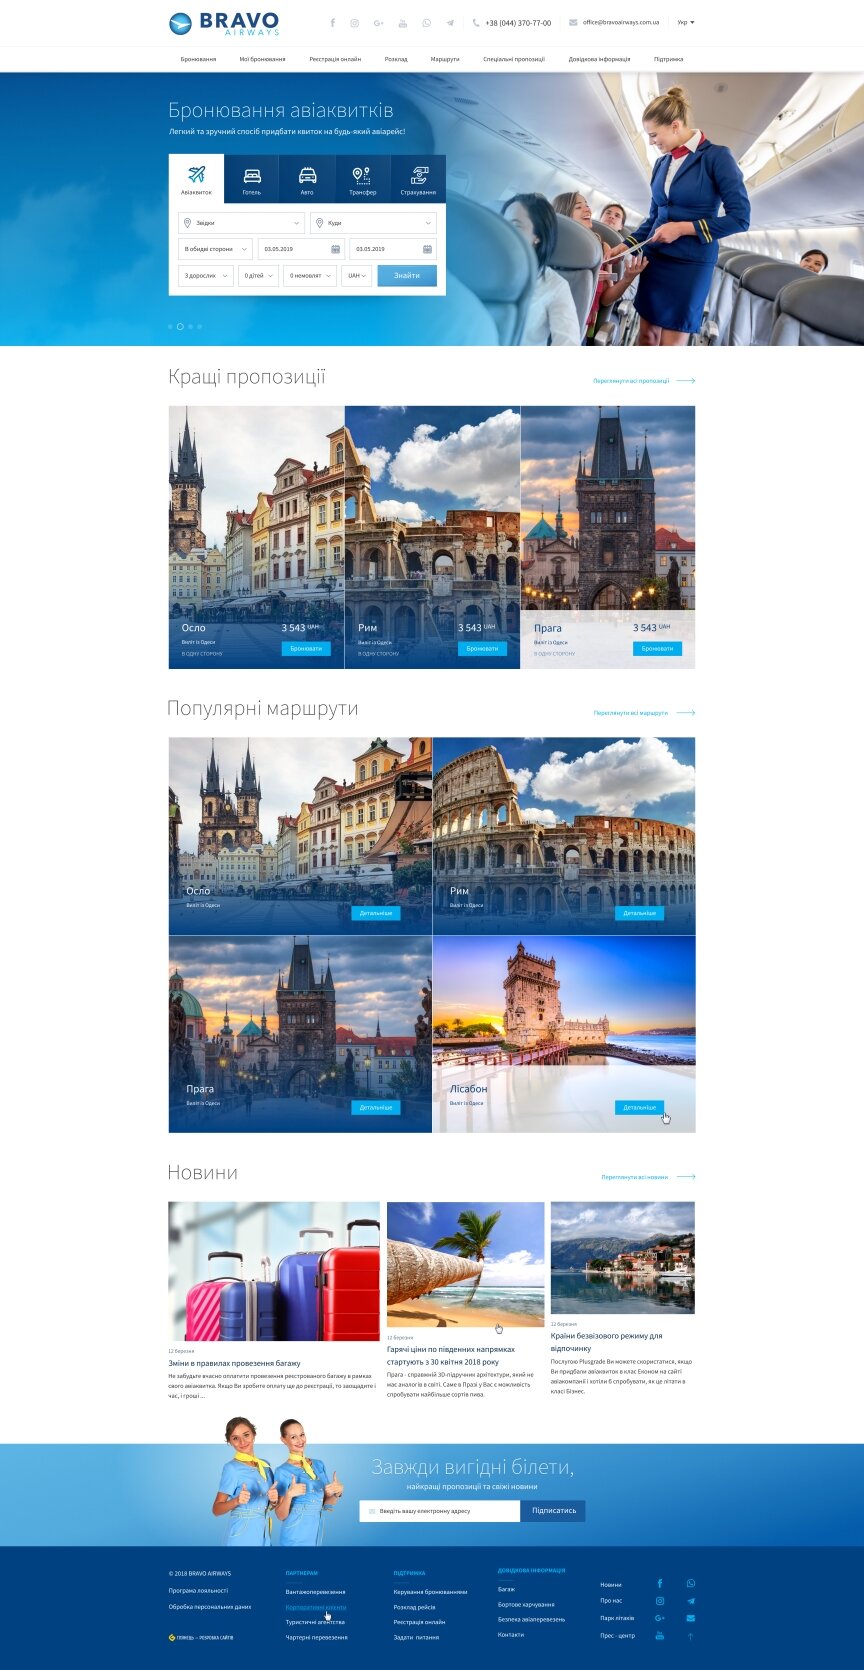 interior page design on the topic Tourism — Airline Bravoairways website 0